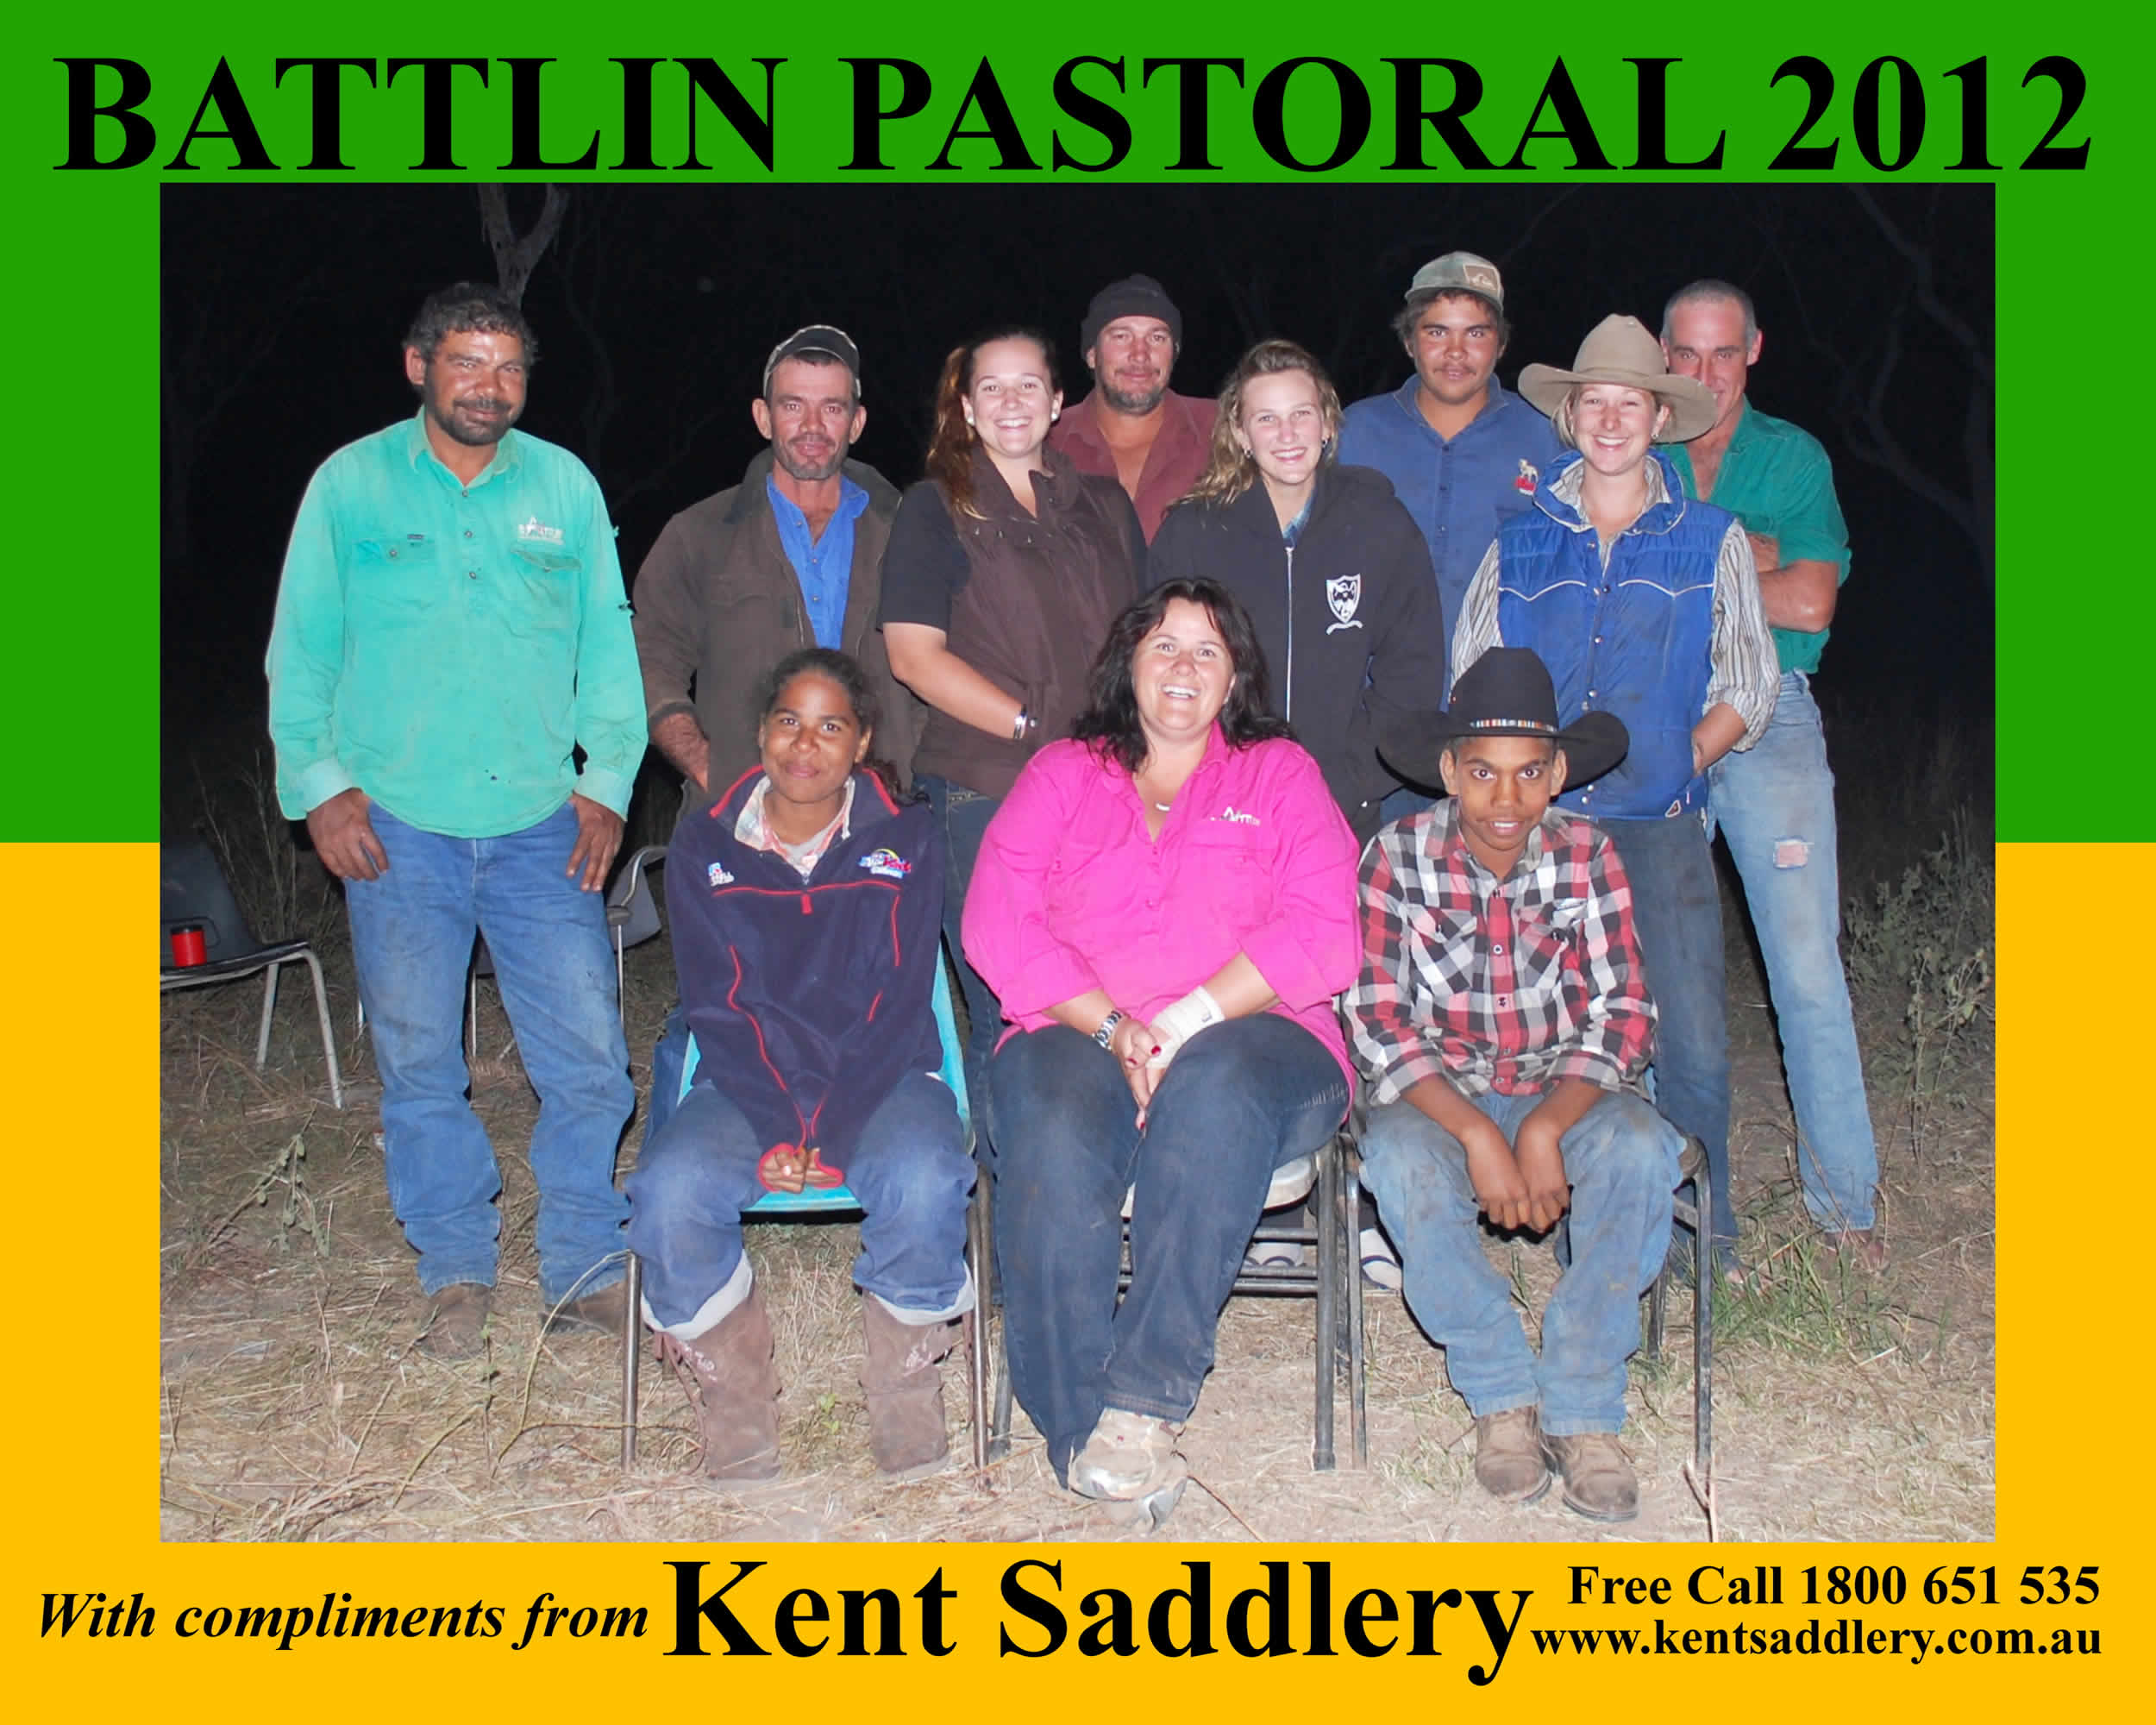 Northern Territory - Battlin Pastoral 15